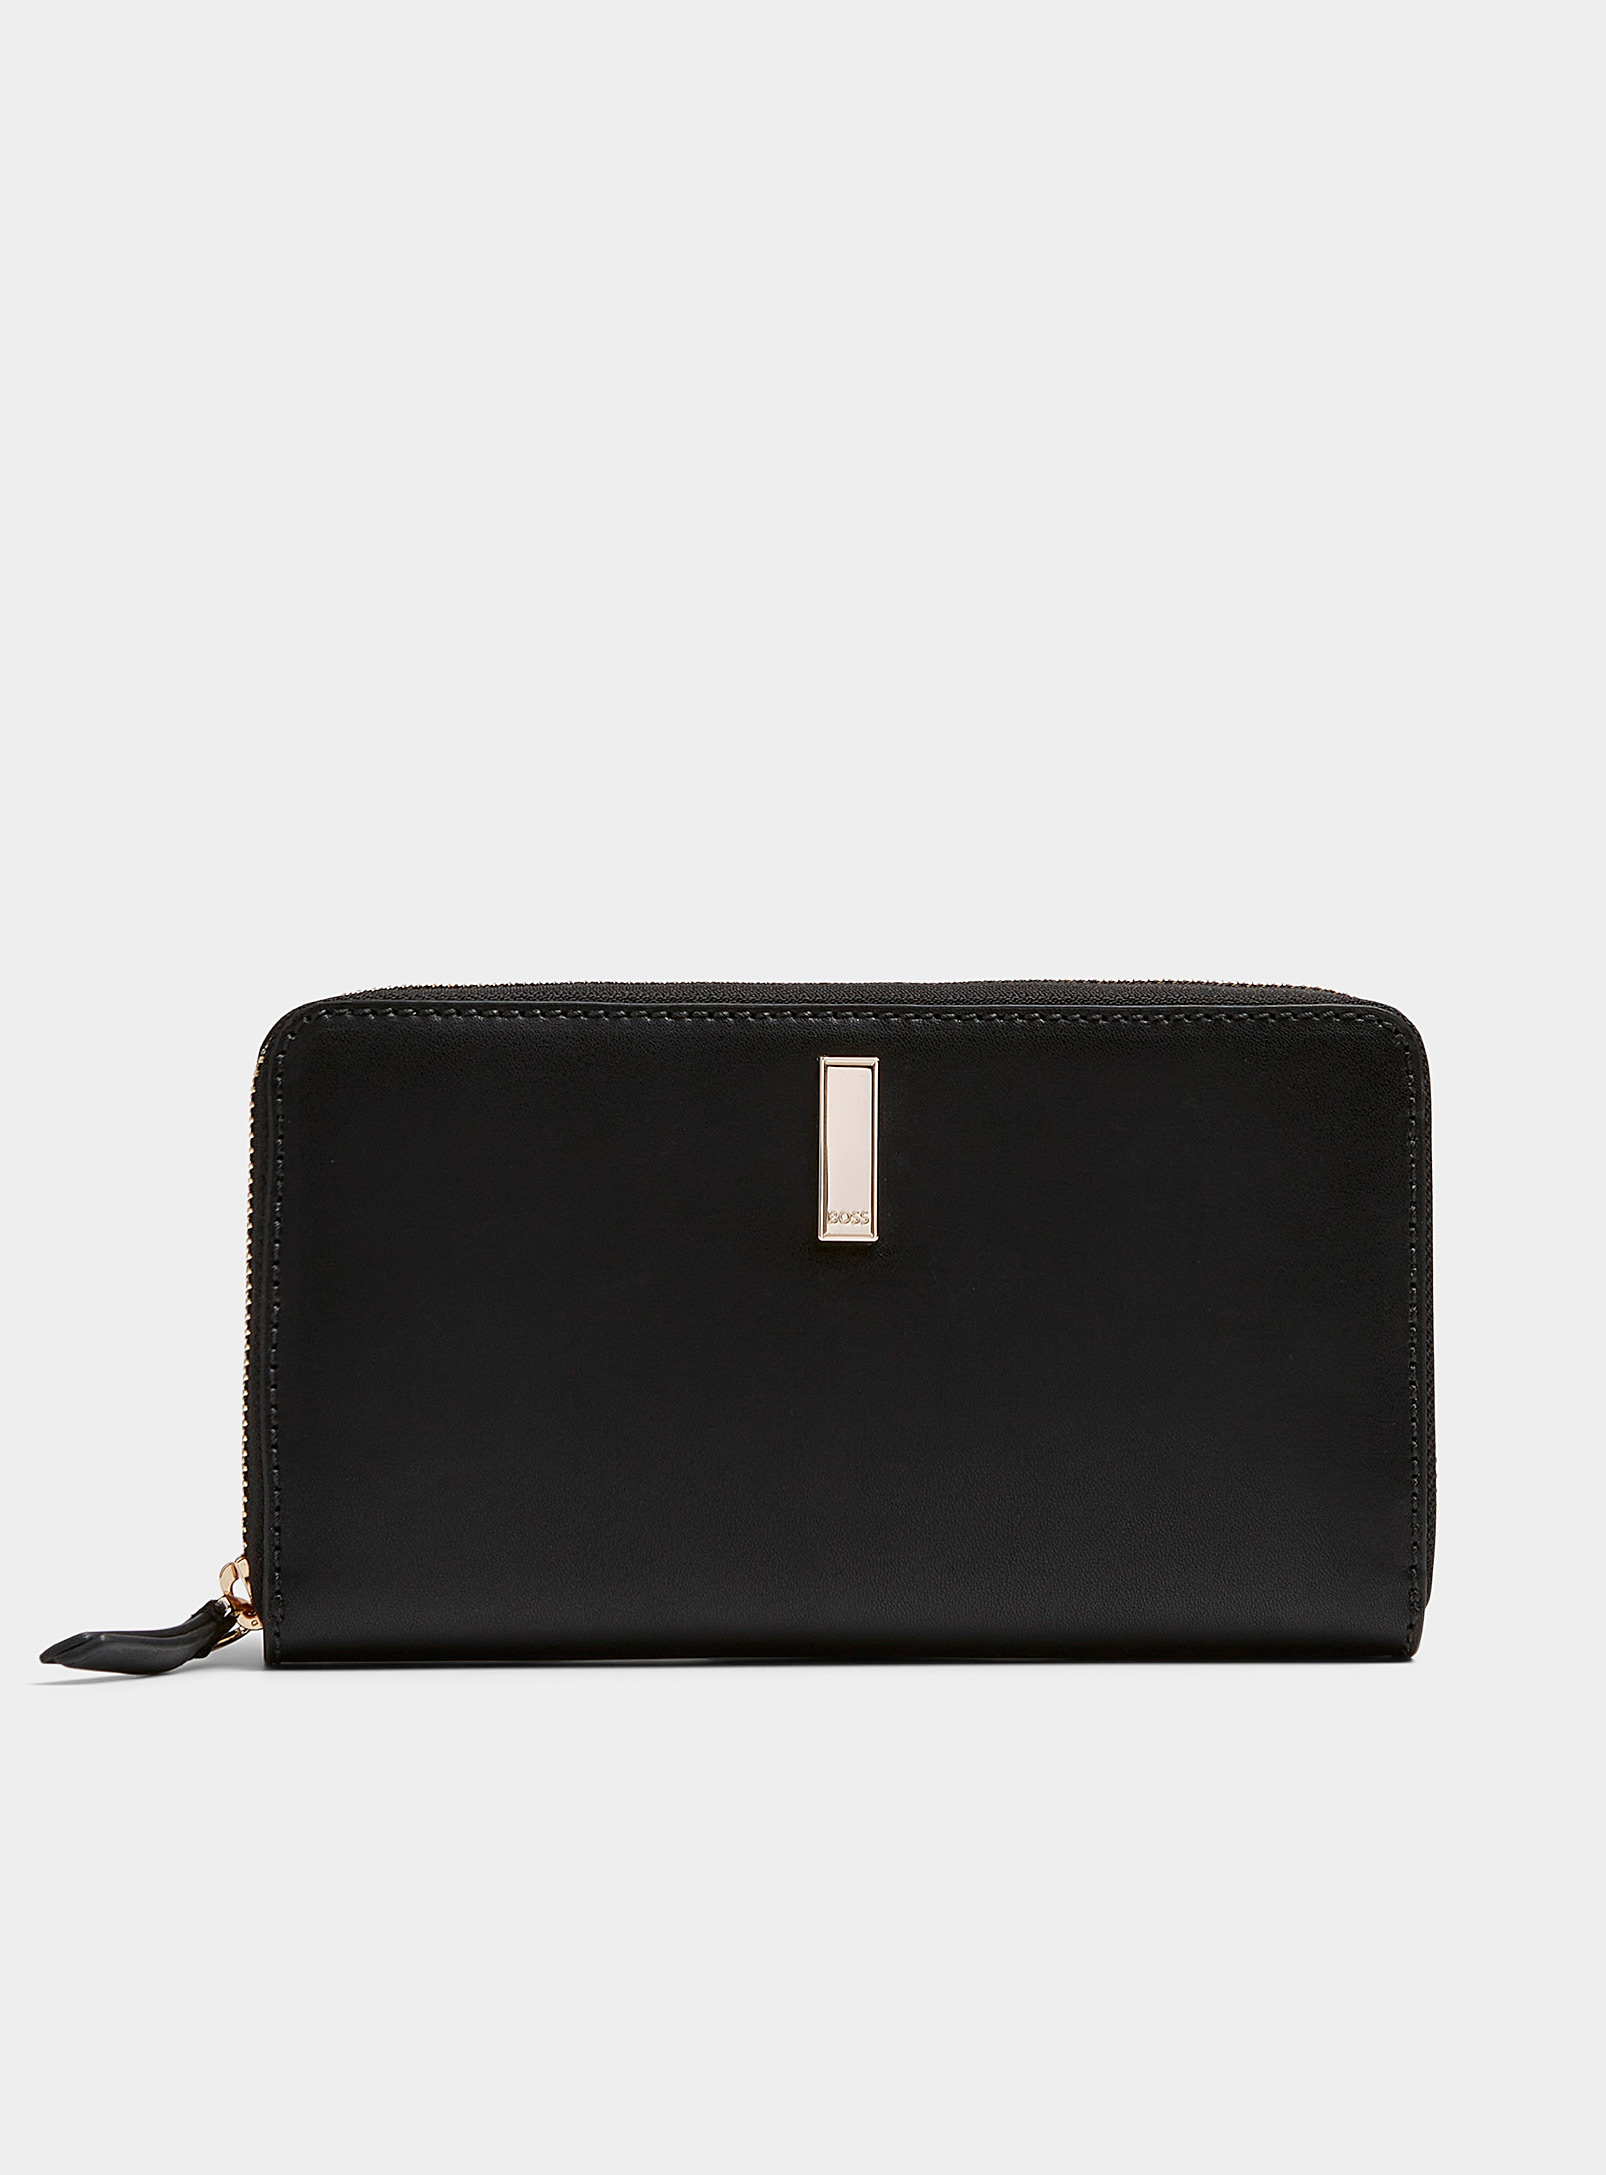 Hugo Boss Ariell Leather Wallet In Black